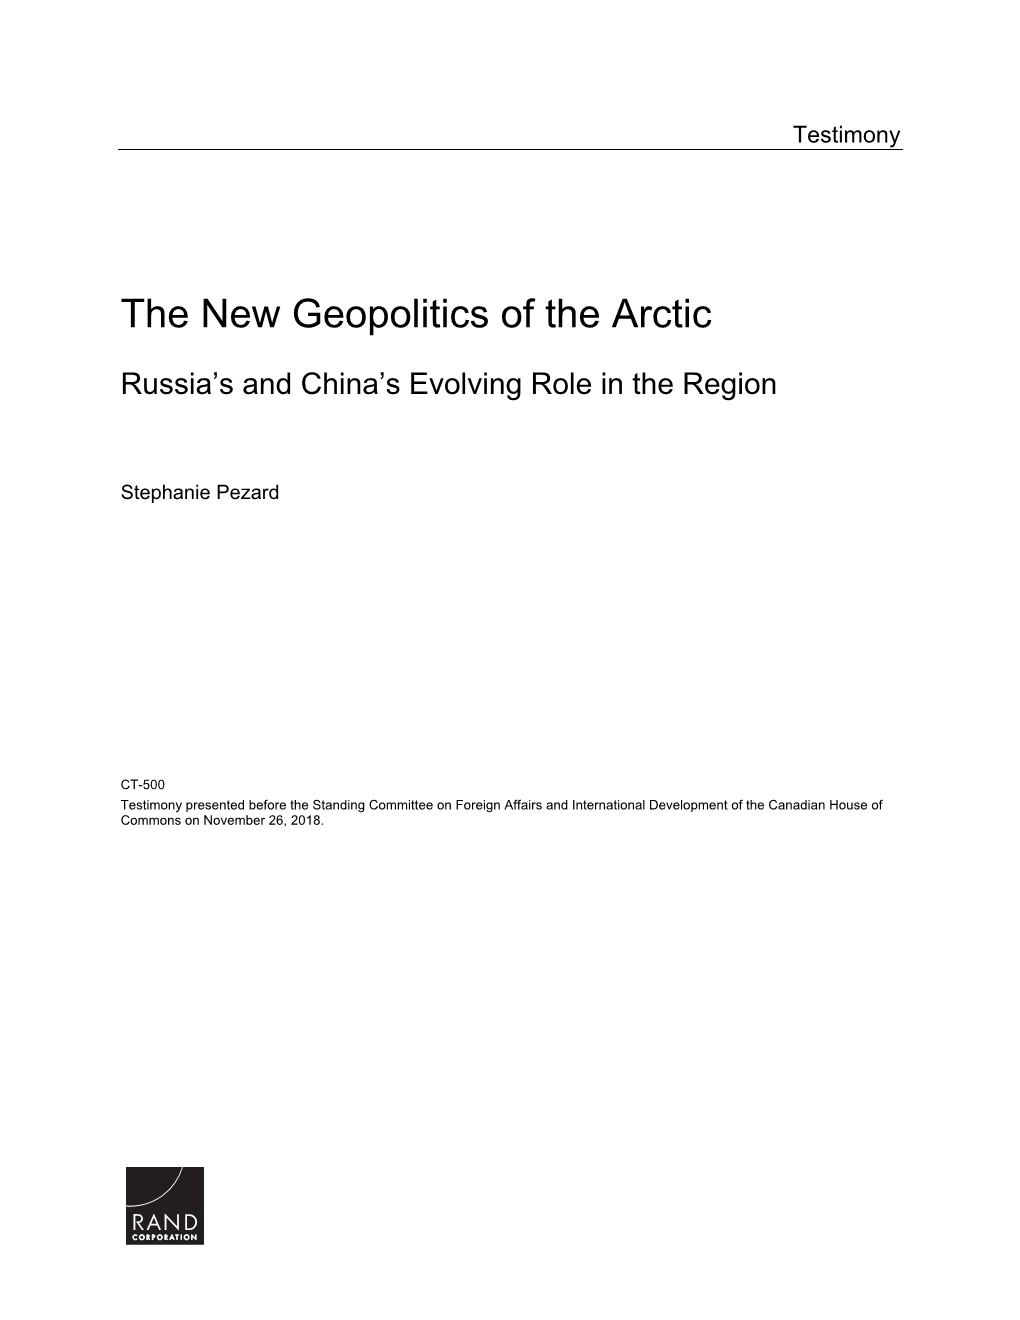 The New Geopolitics of the Arctic